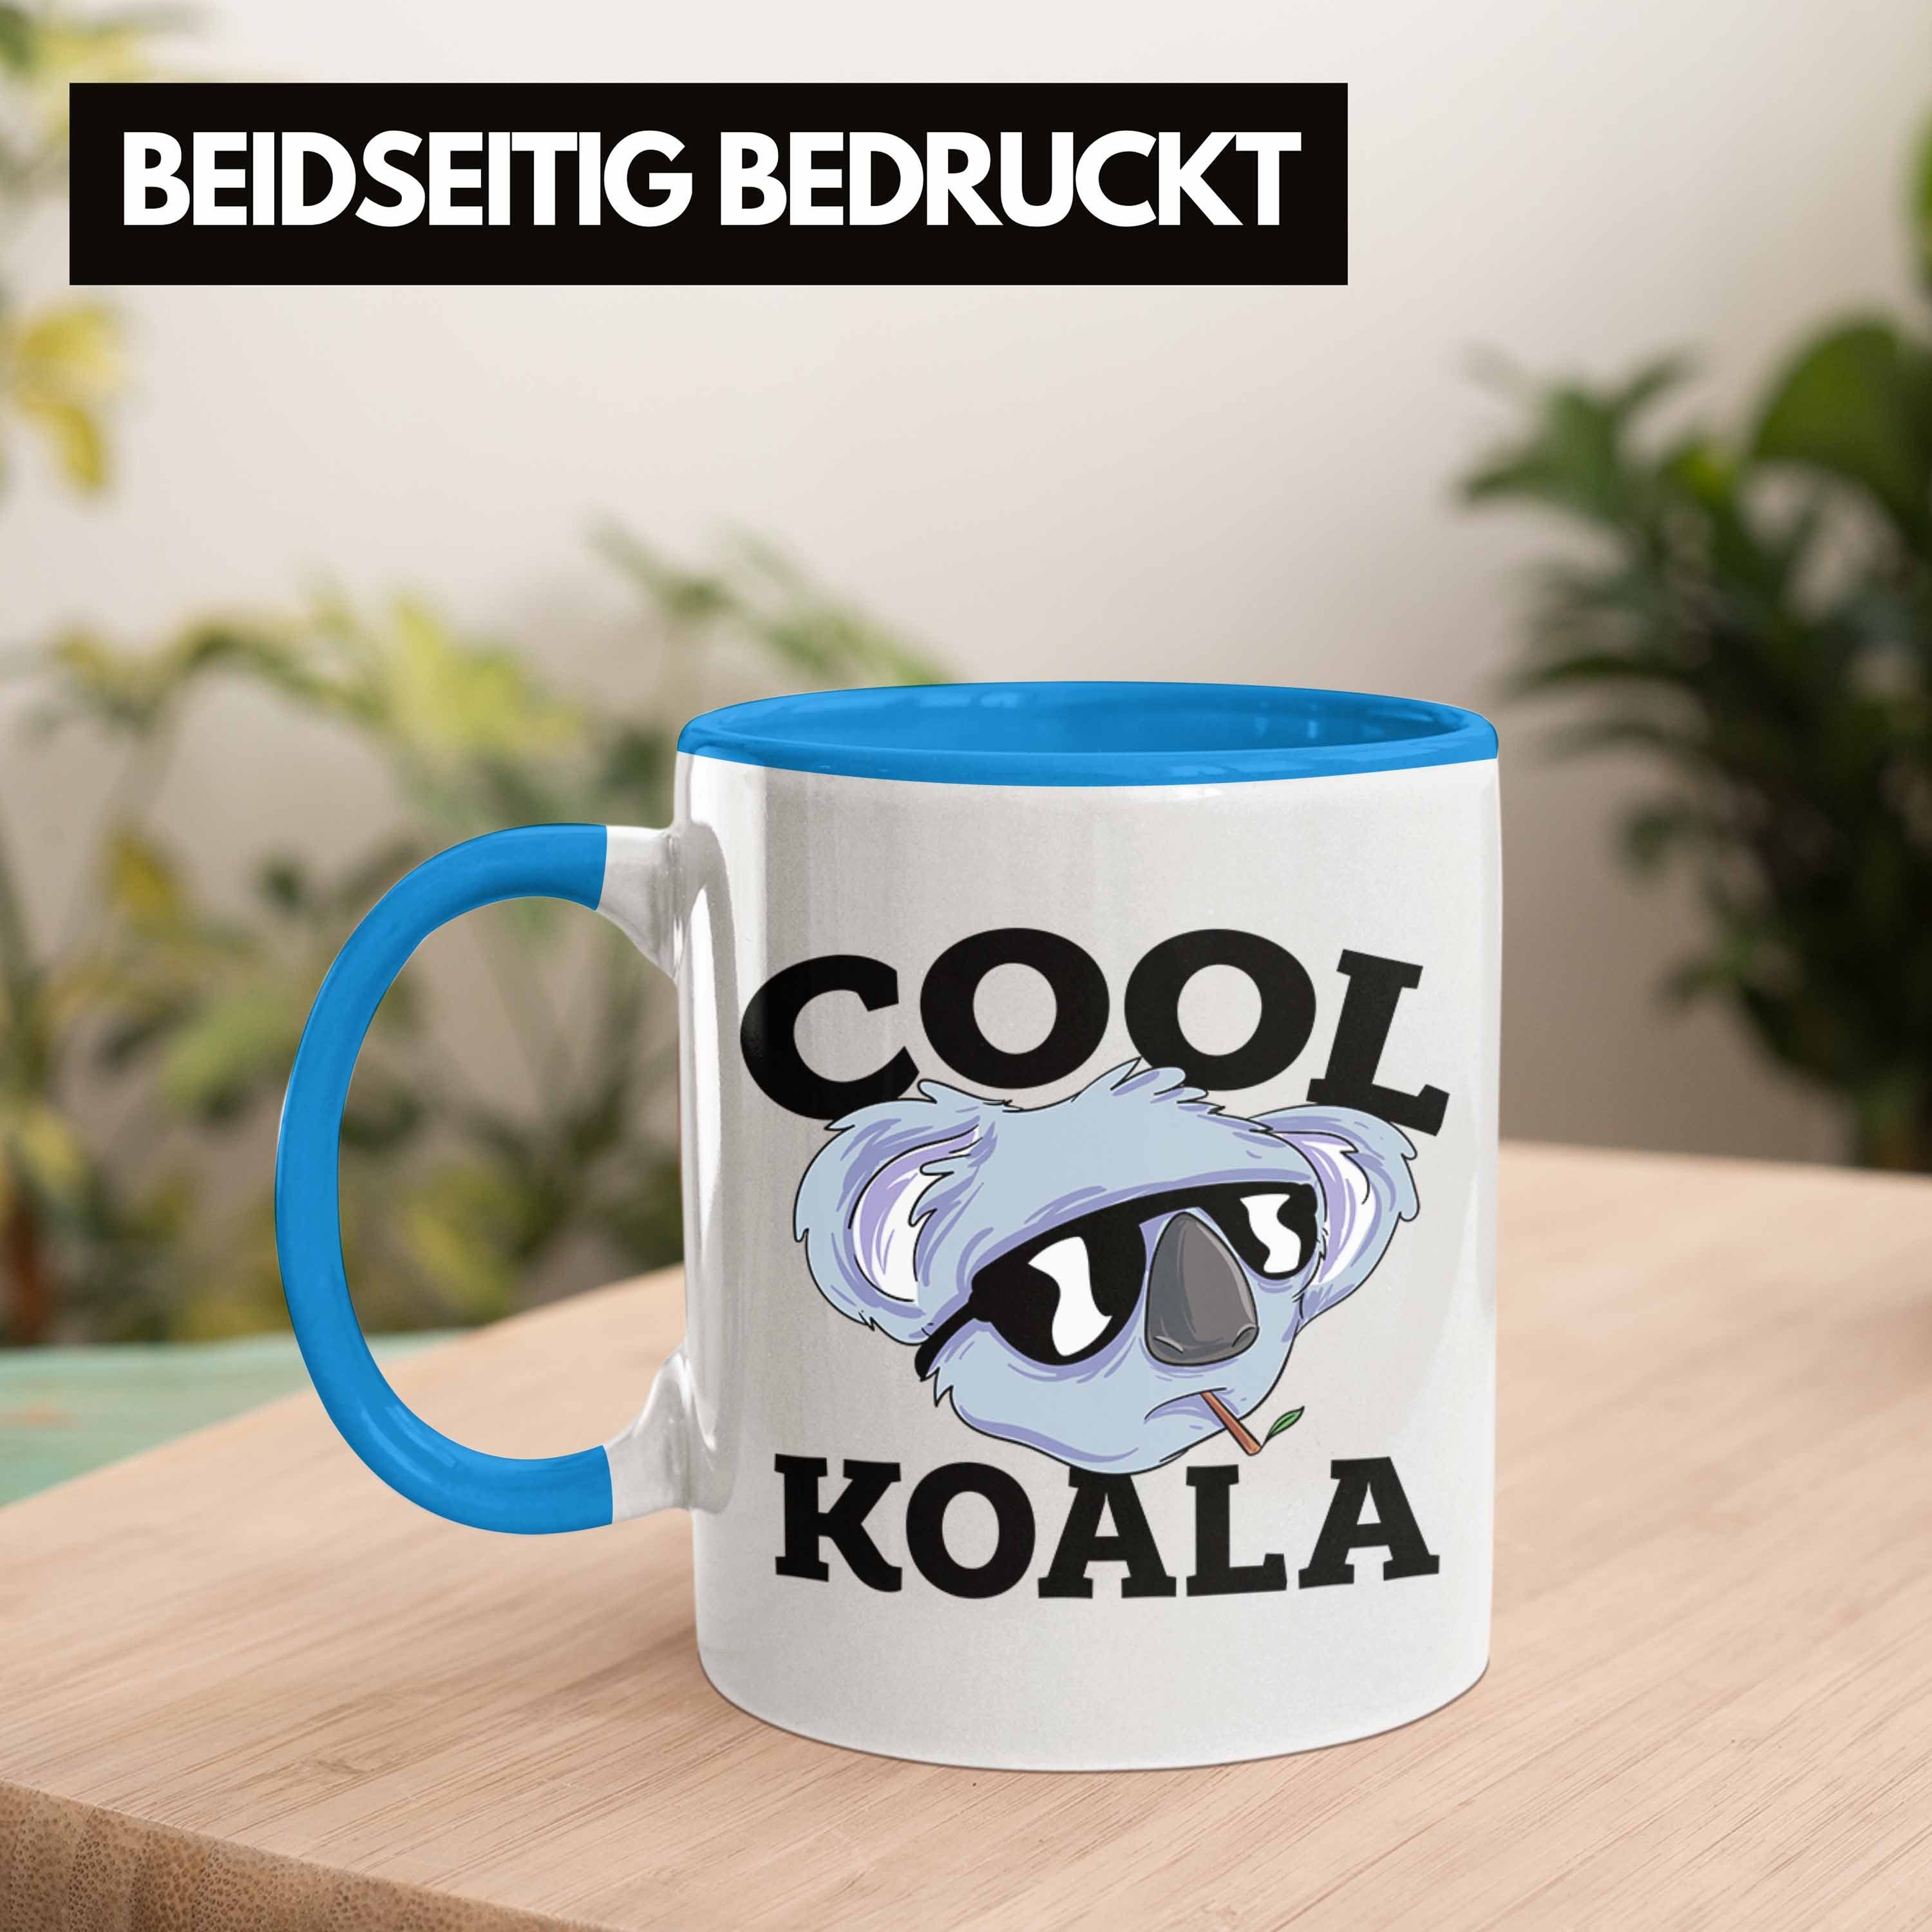 Koala Koala-Liebhaber Tasse Geschenkidee für Tasse Blau Koala-Aufdruck Trendation Tasse